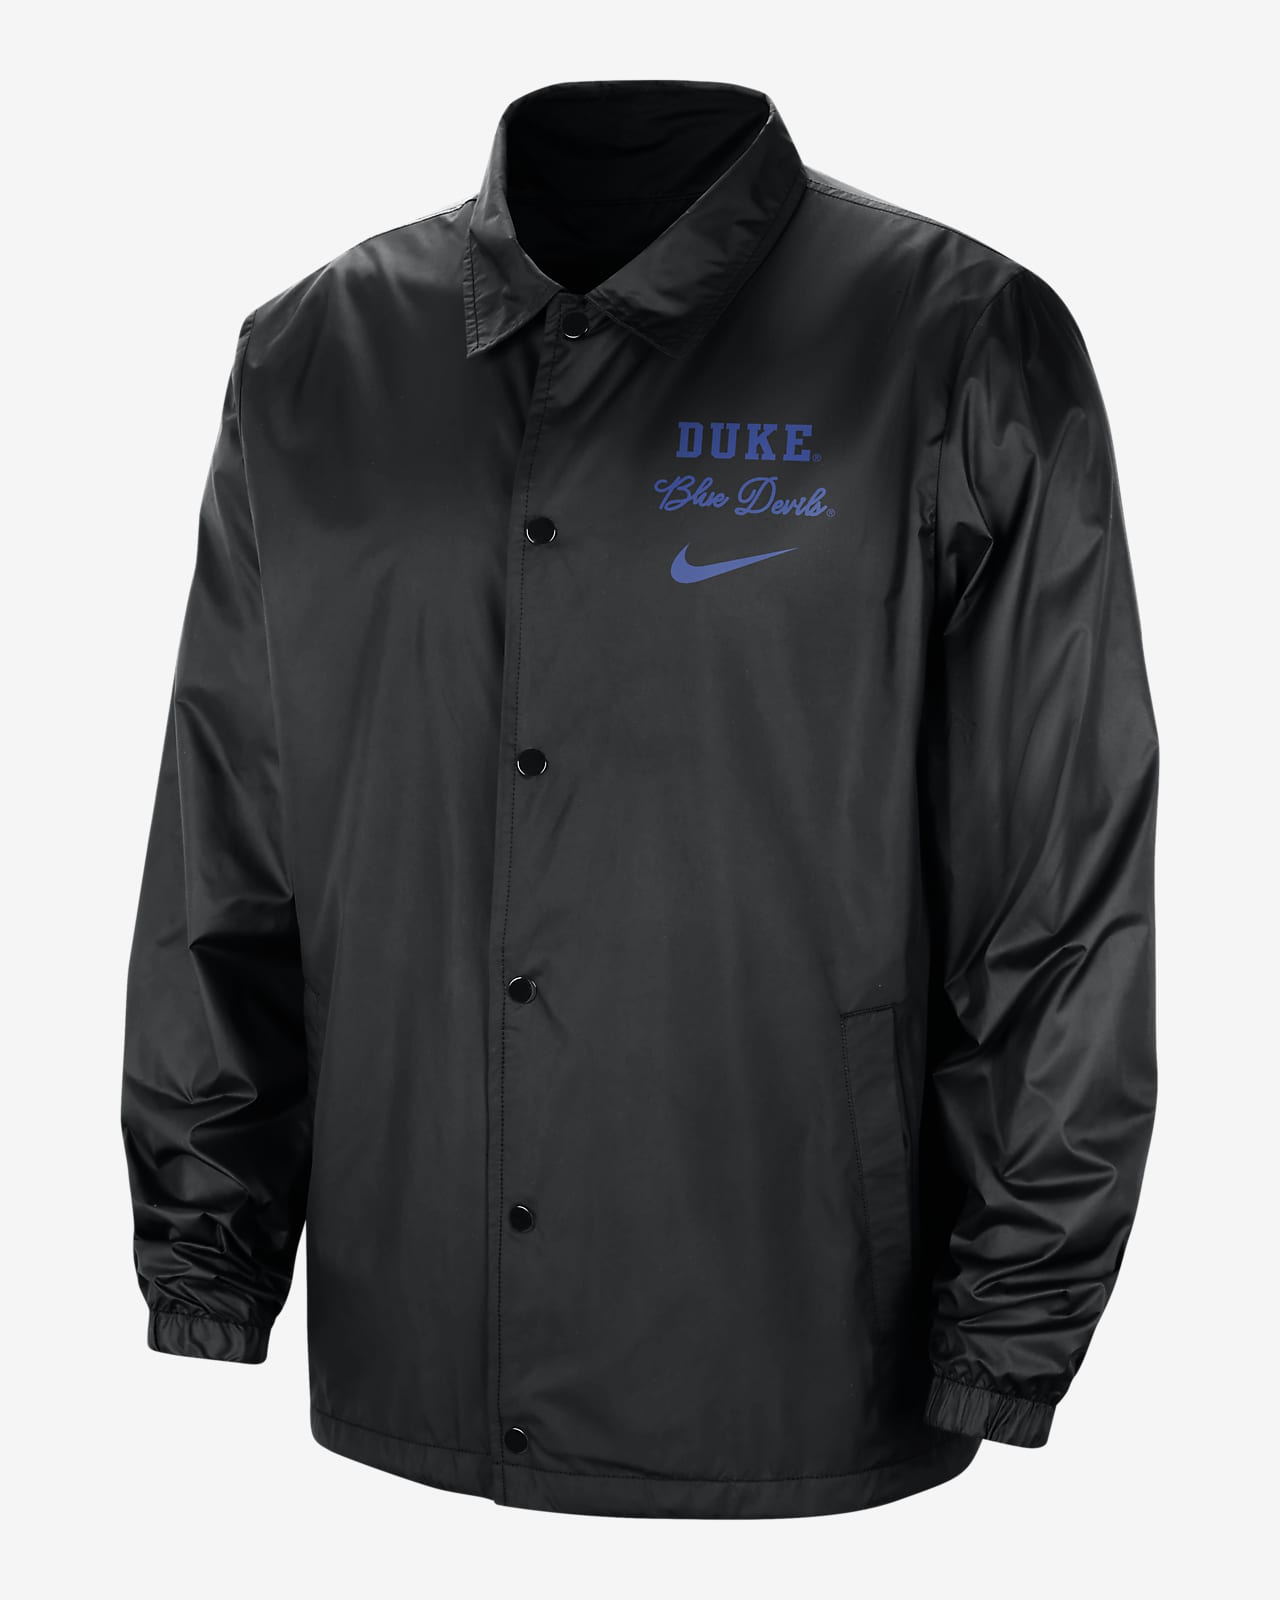 Duke Men's Nike College Jacket